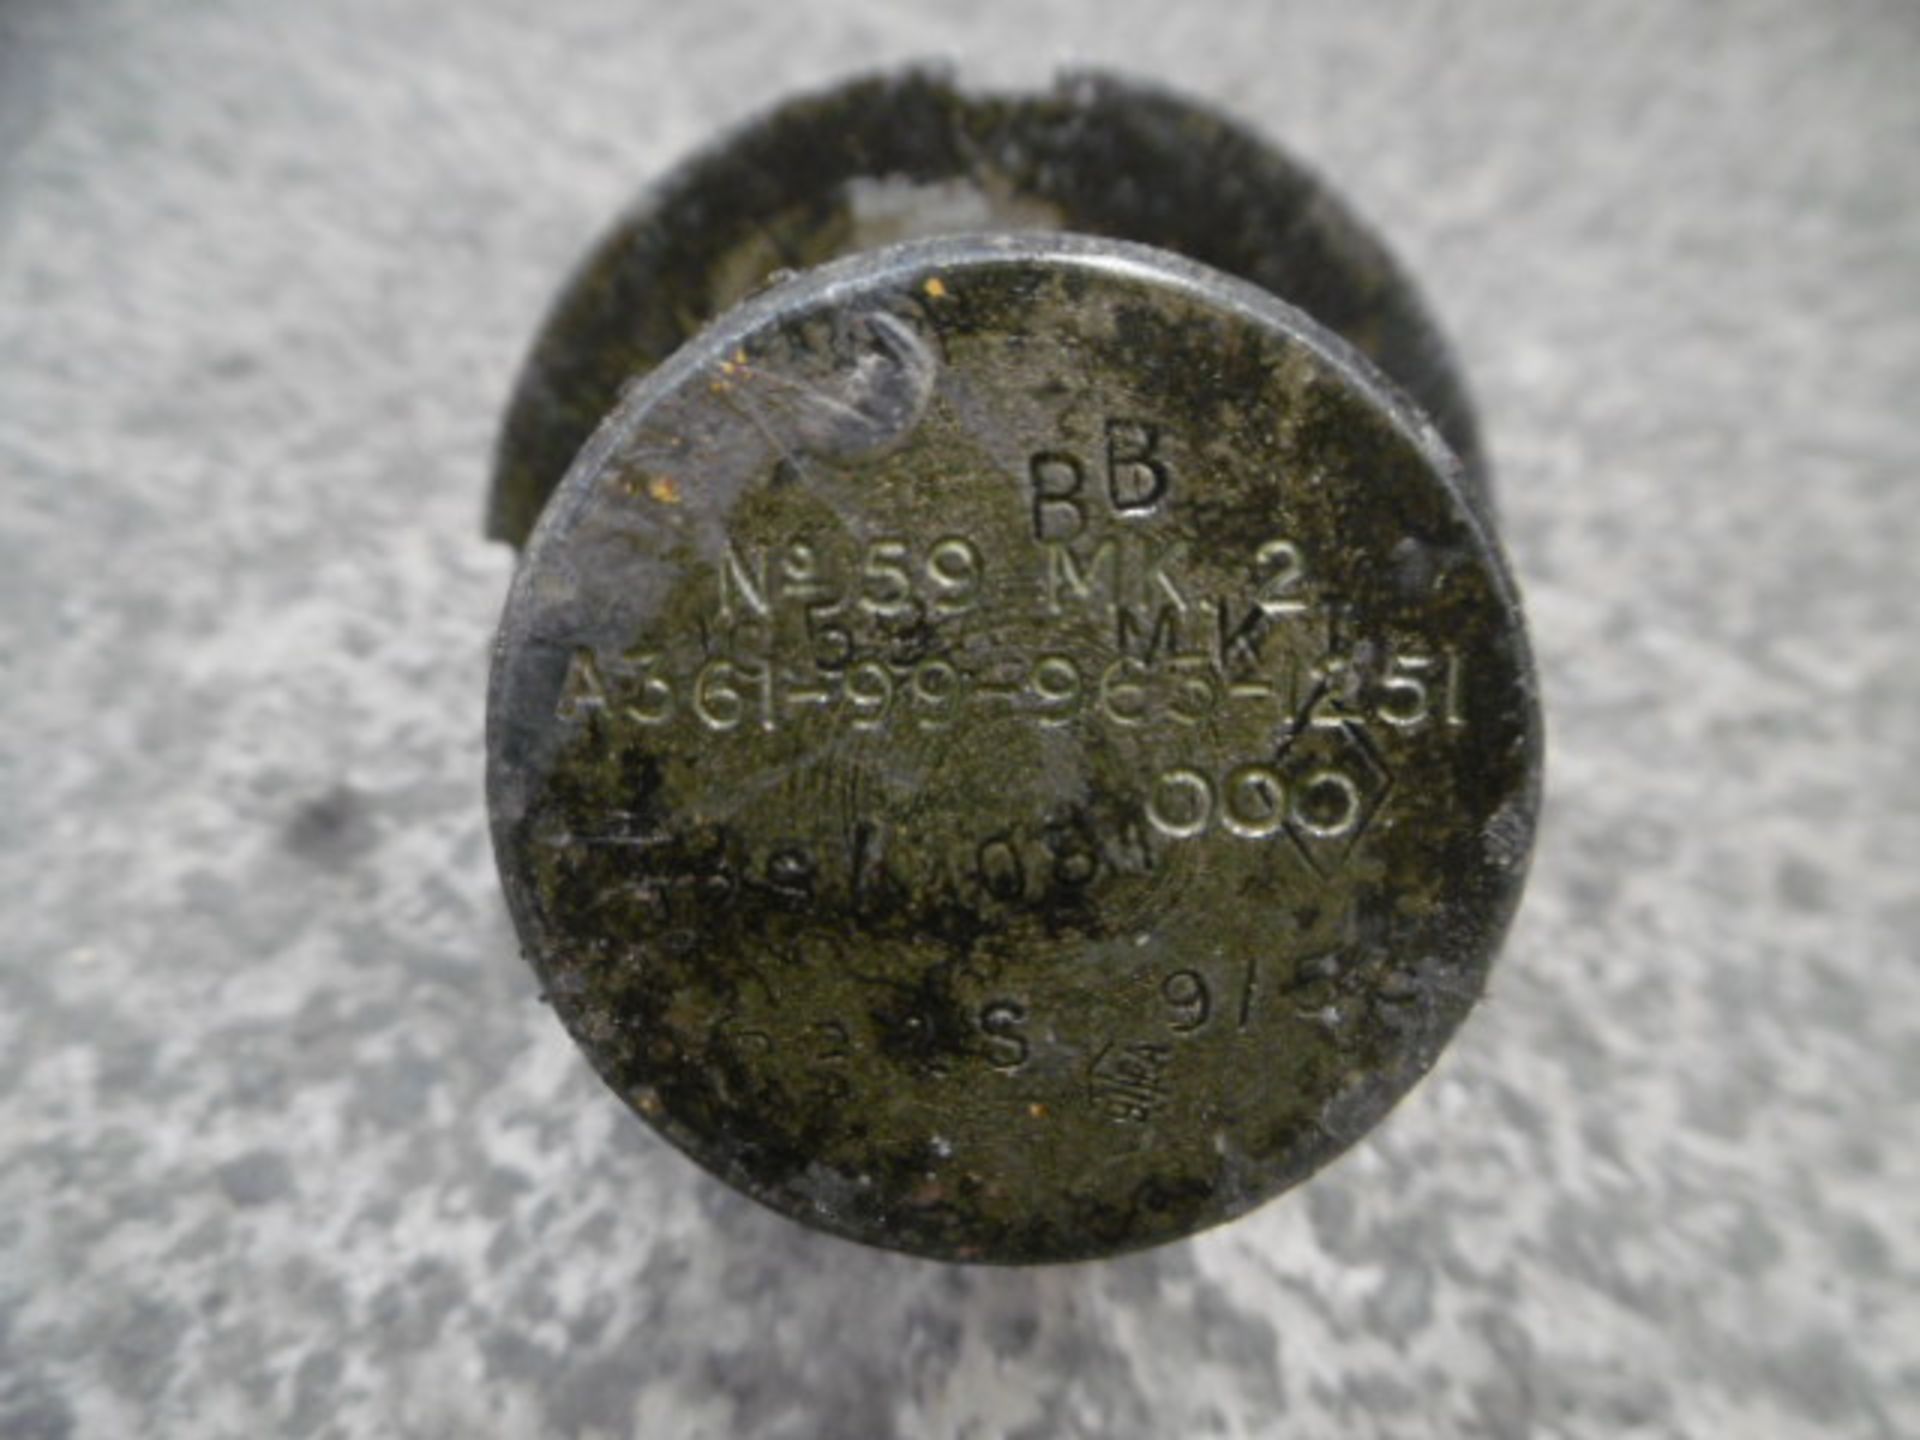 12 x No. 59 A/C Bomb Nose Plugs - Image 4 of 6